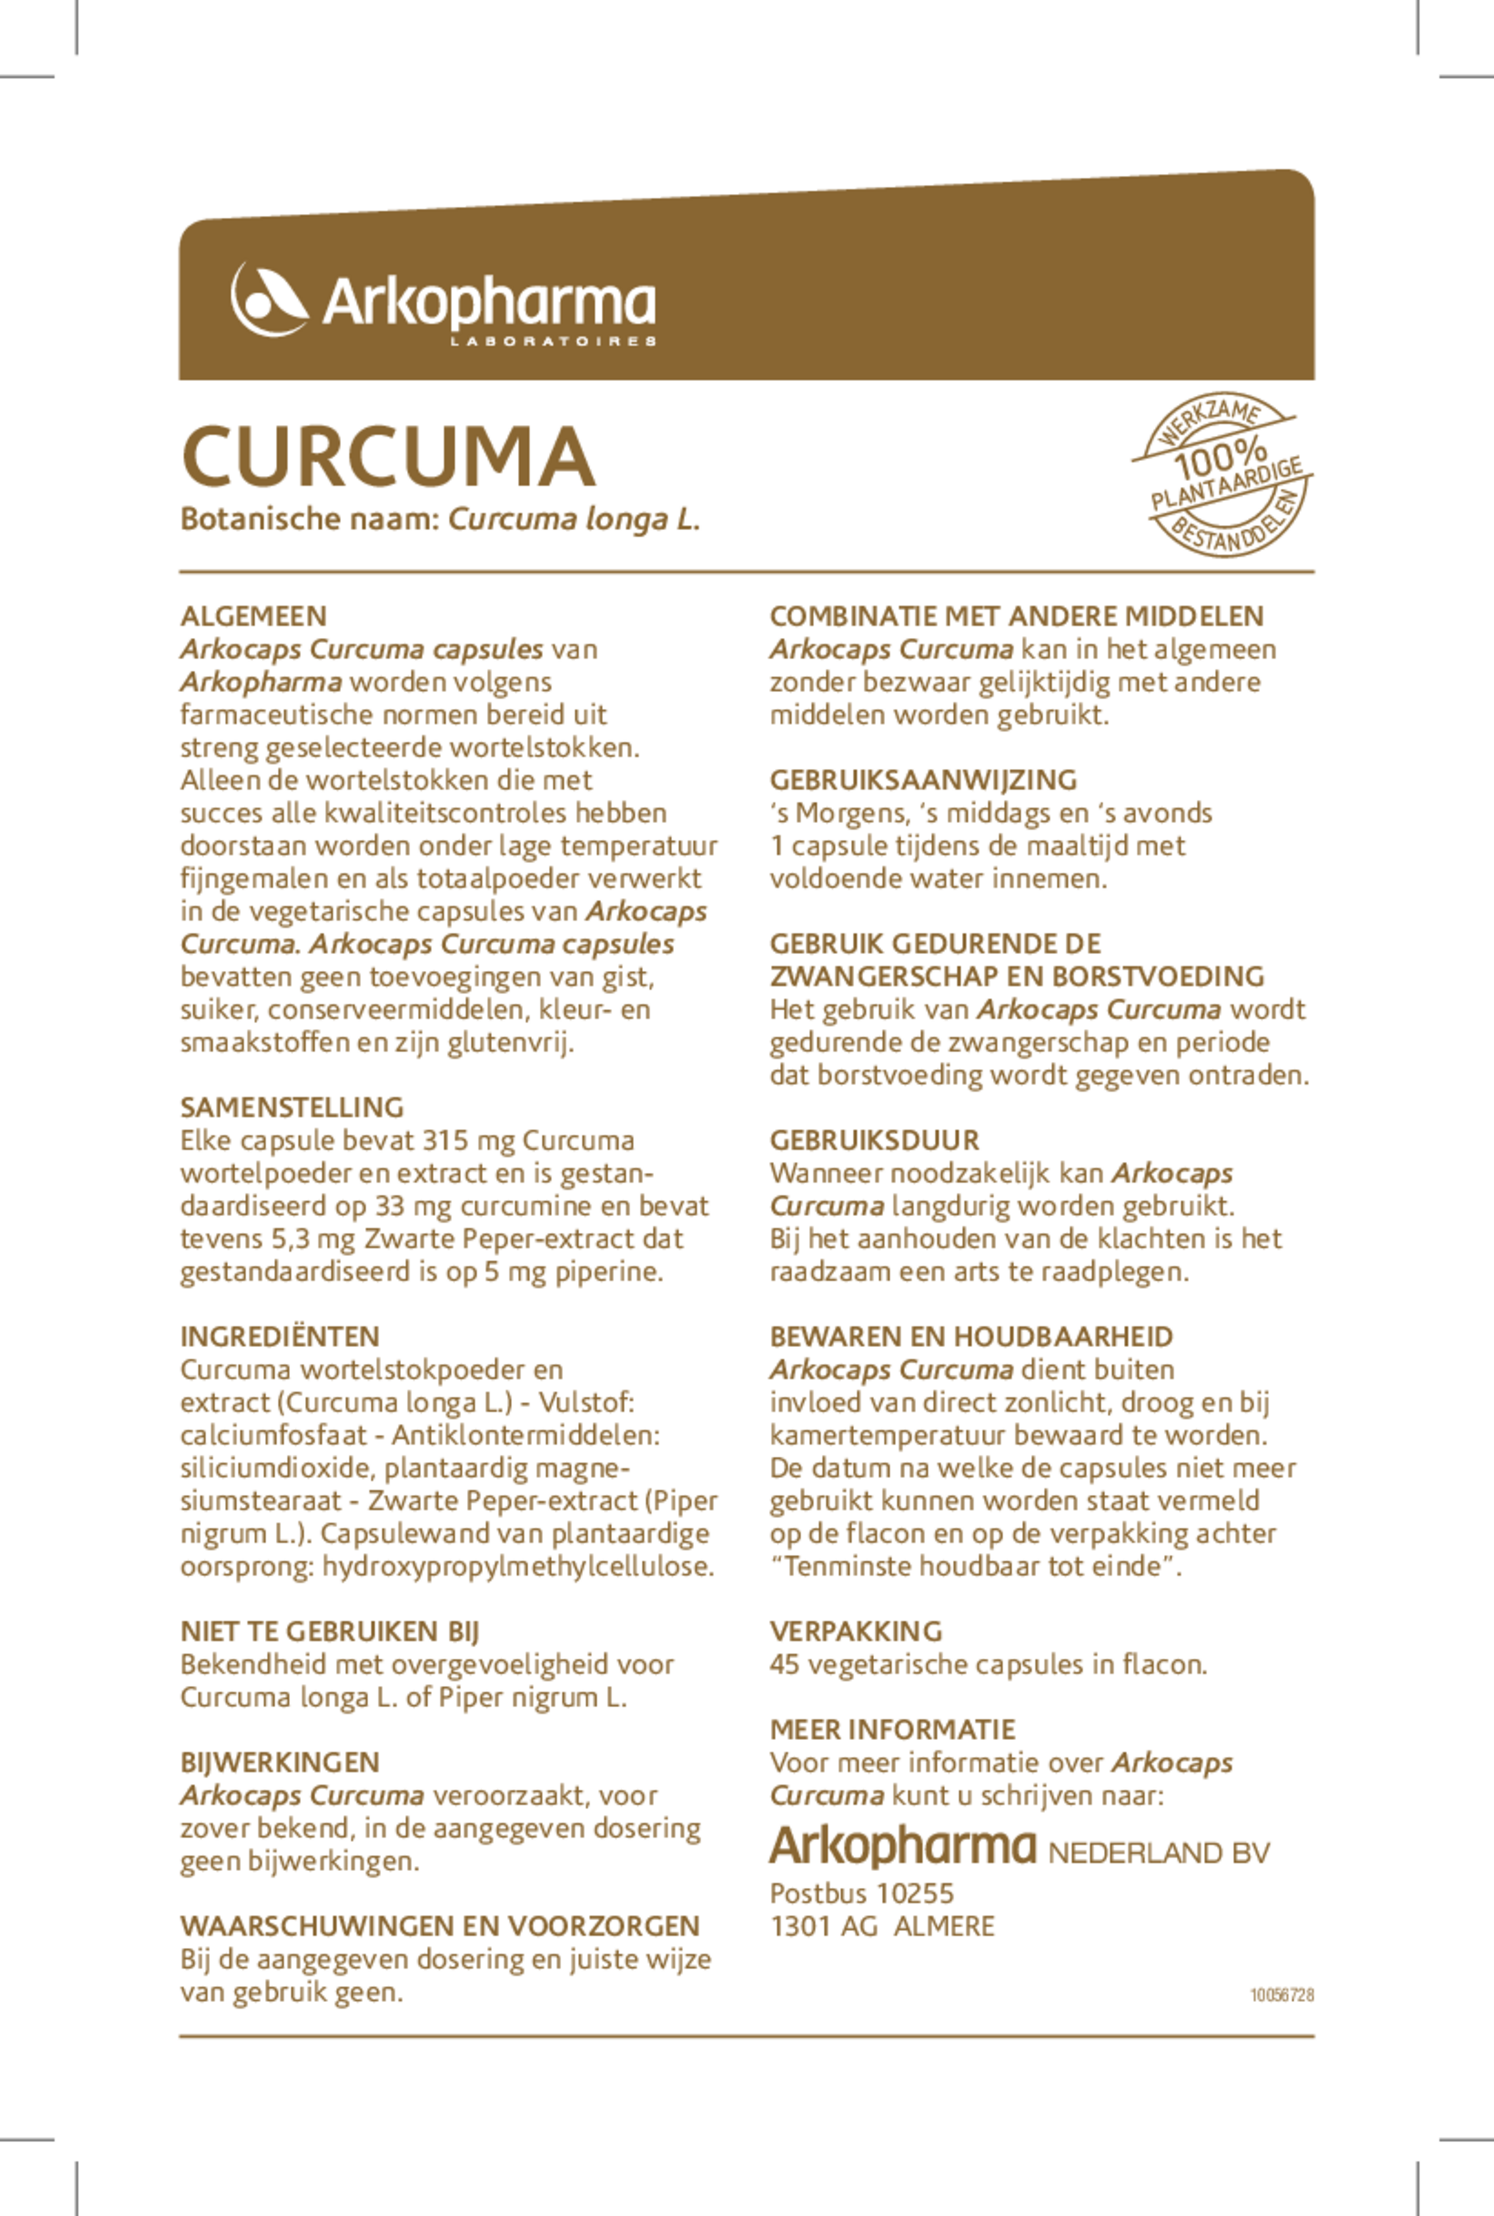 Curcuma + Piperine Capsules afbeelding van document #1, gebruiksaanwijzing